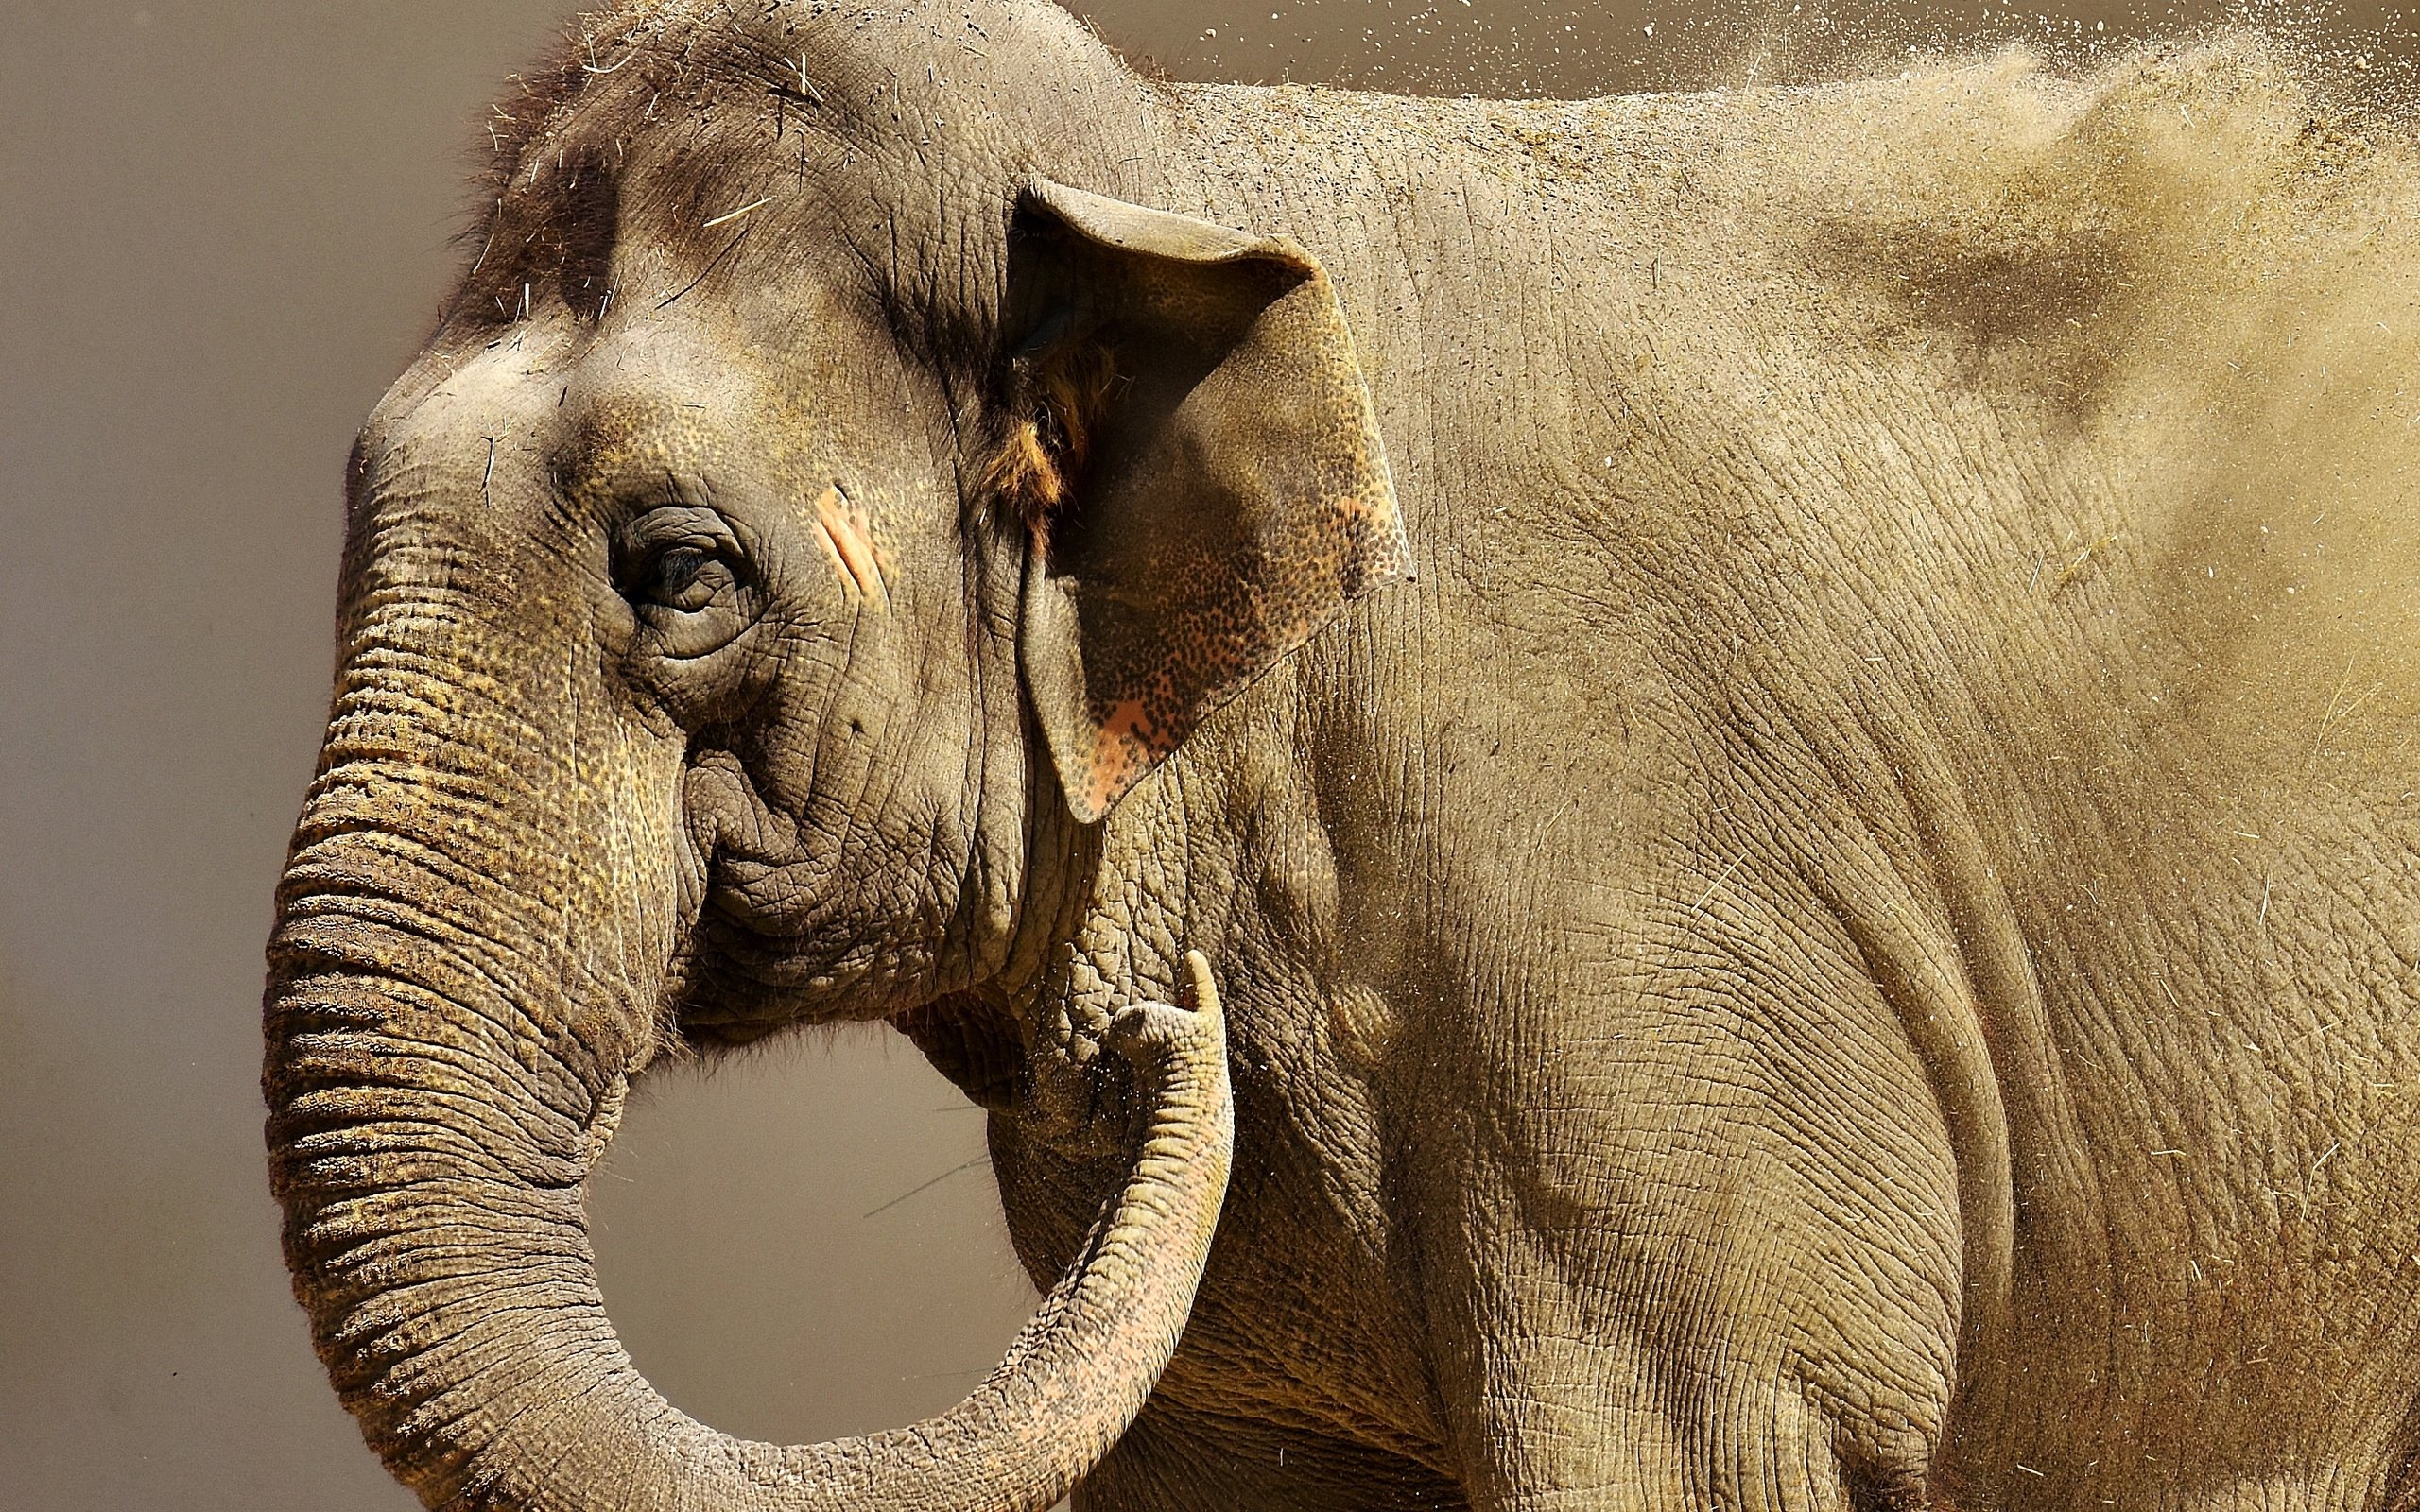 This animal is big. Животное с хоботом. Хобот слона. Животное с носом слона. Животное с хоботом но не слон.